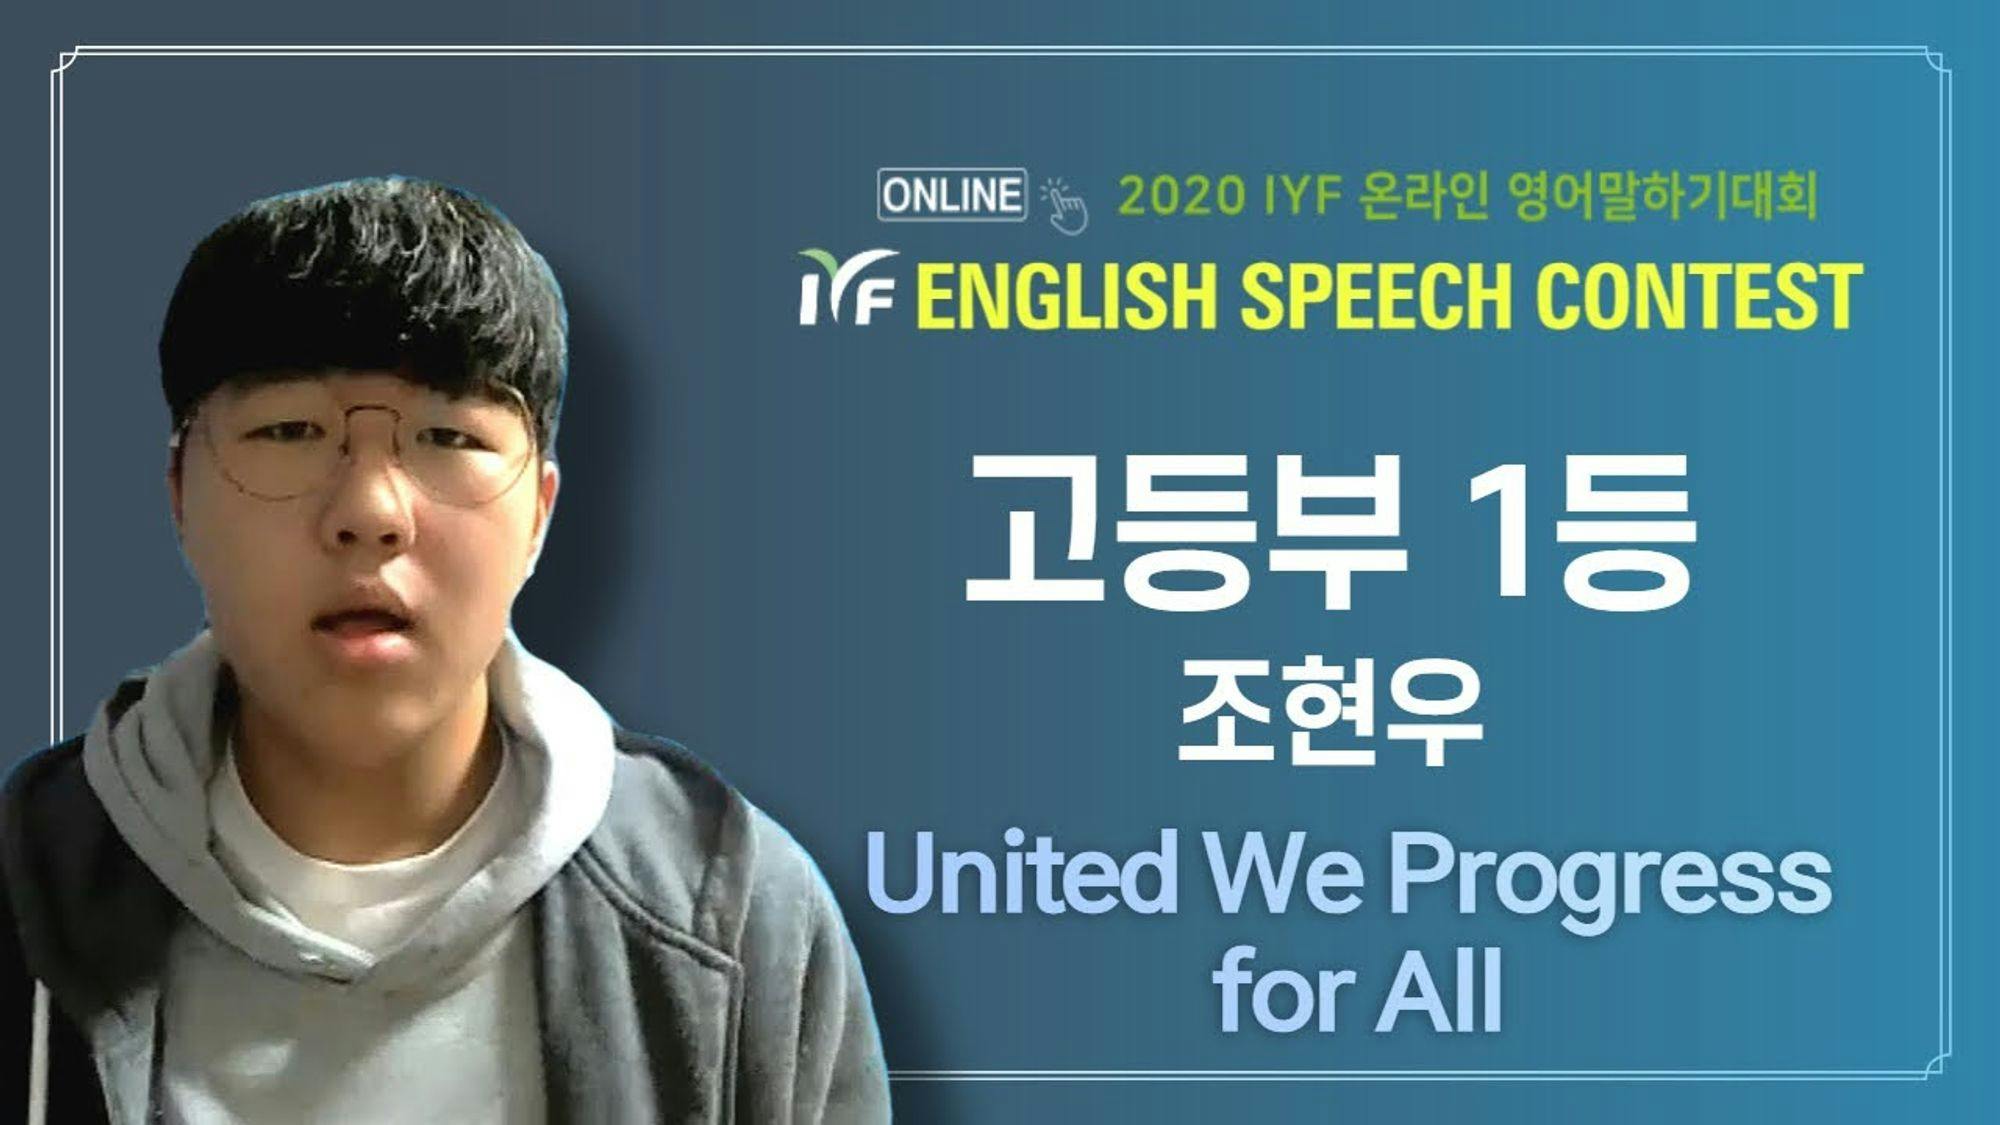 20th IYF Online English Speech Contest 고등부 1등 조현우